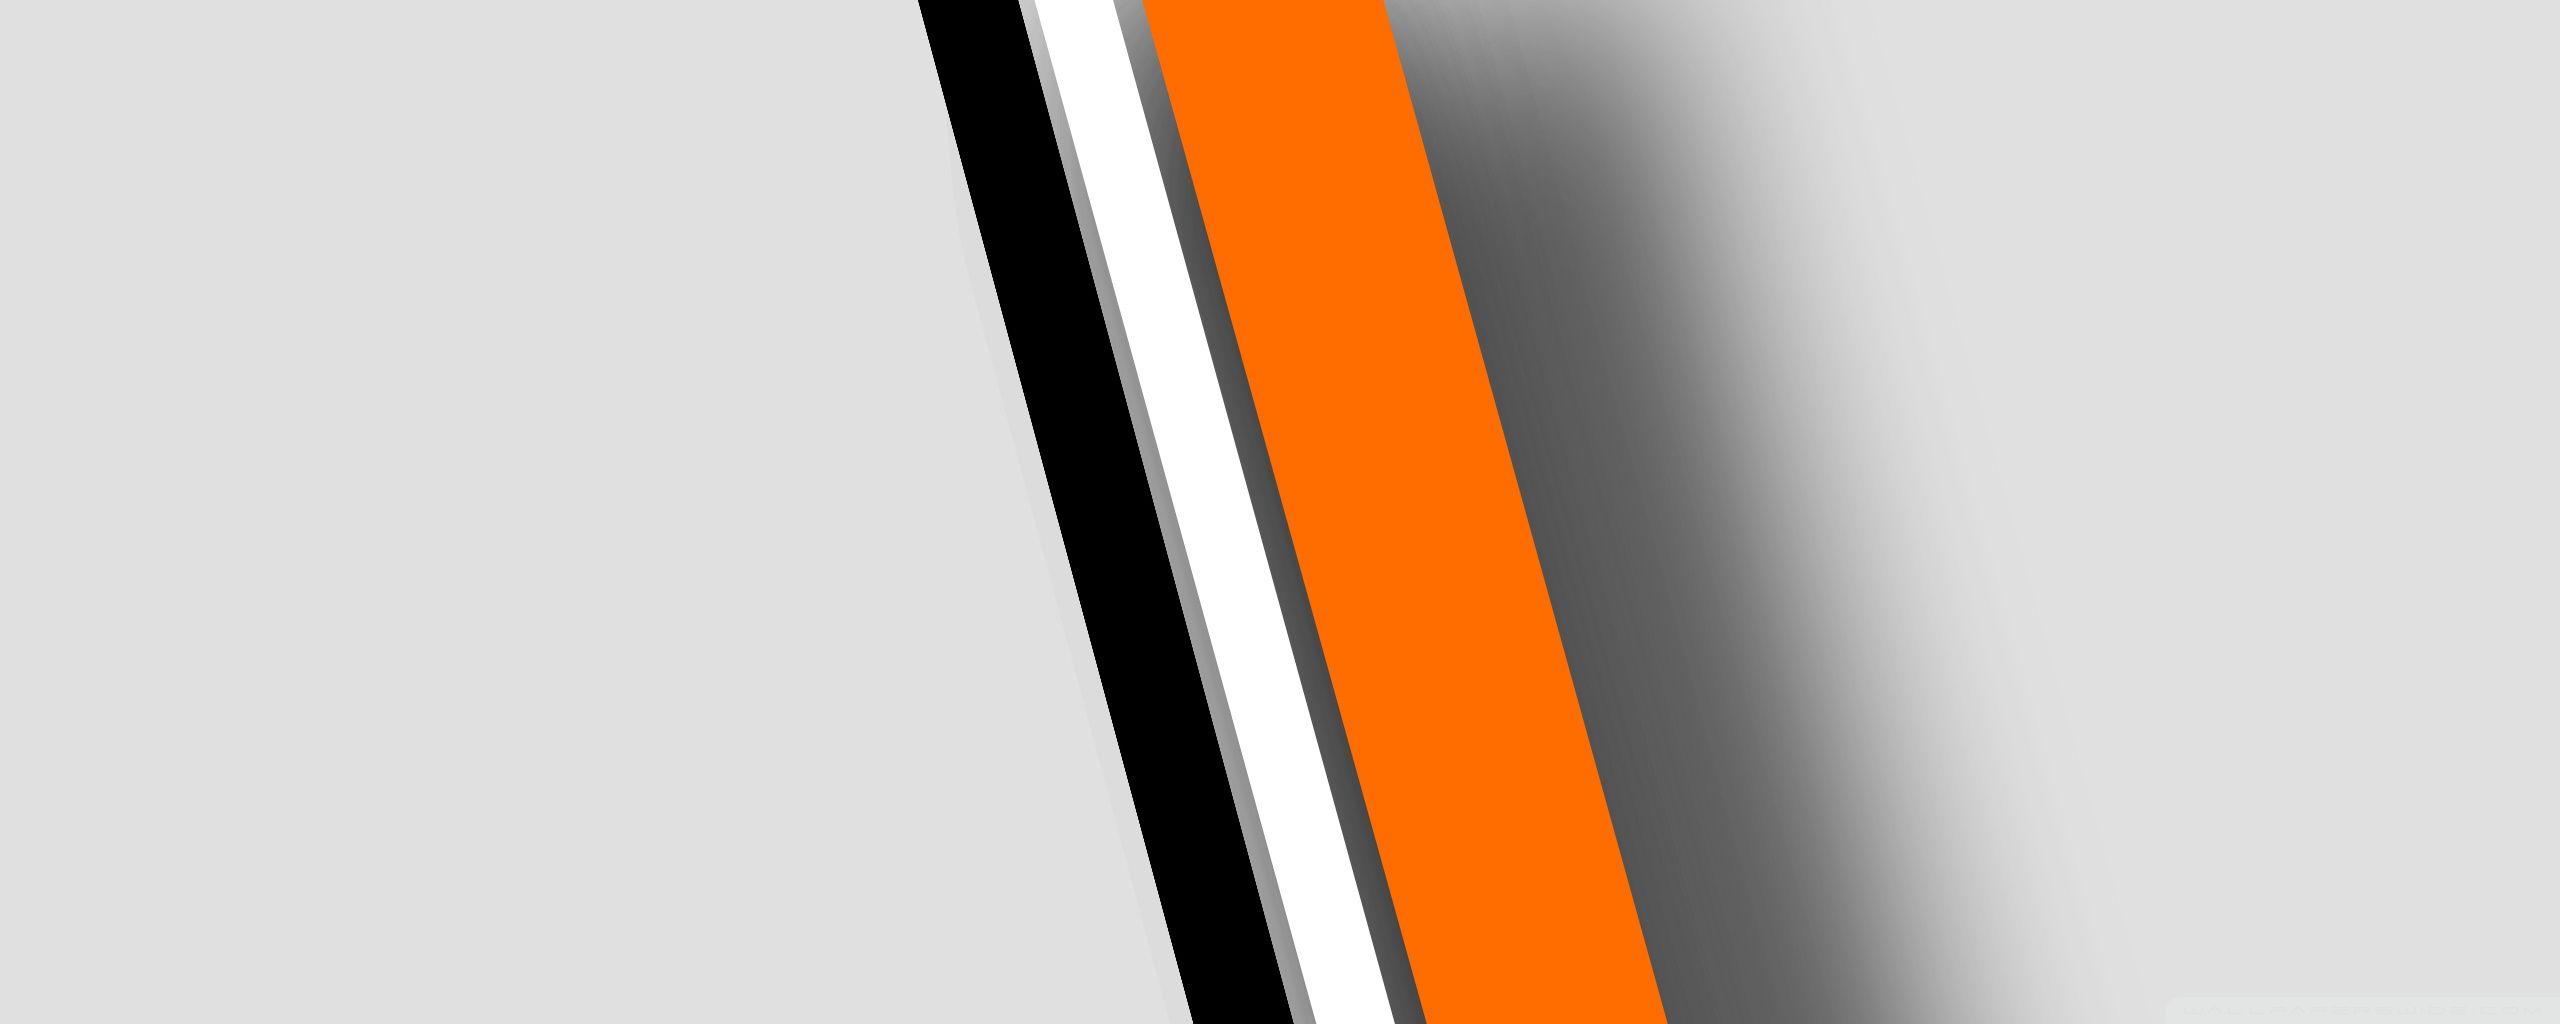 Download Orange ULTRA Wide Wallpaper